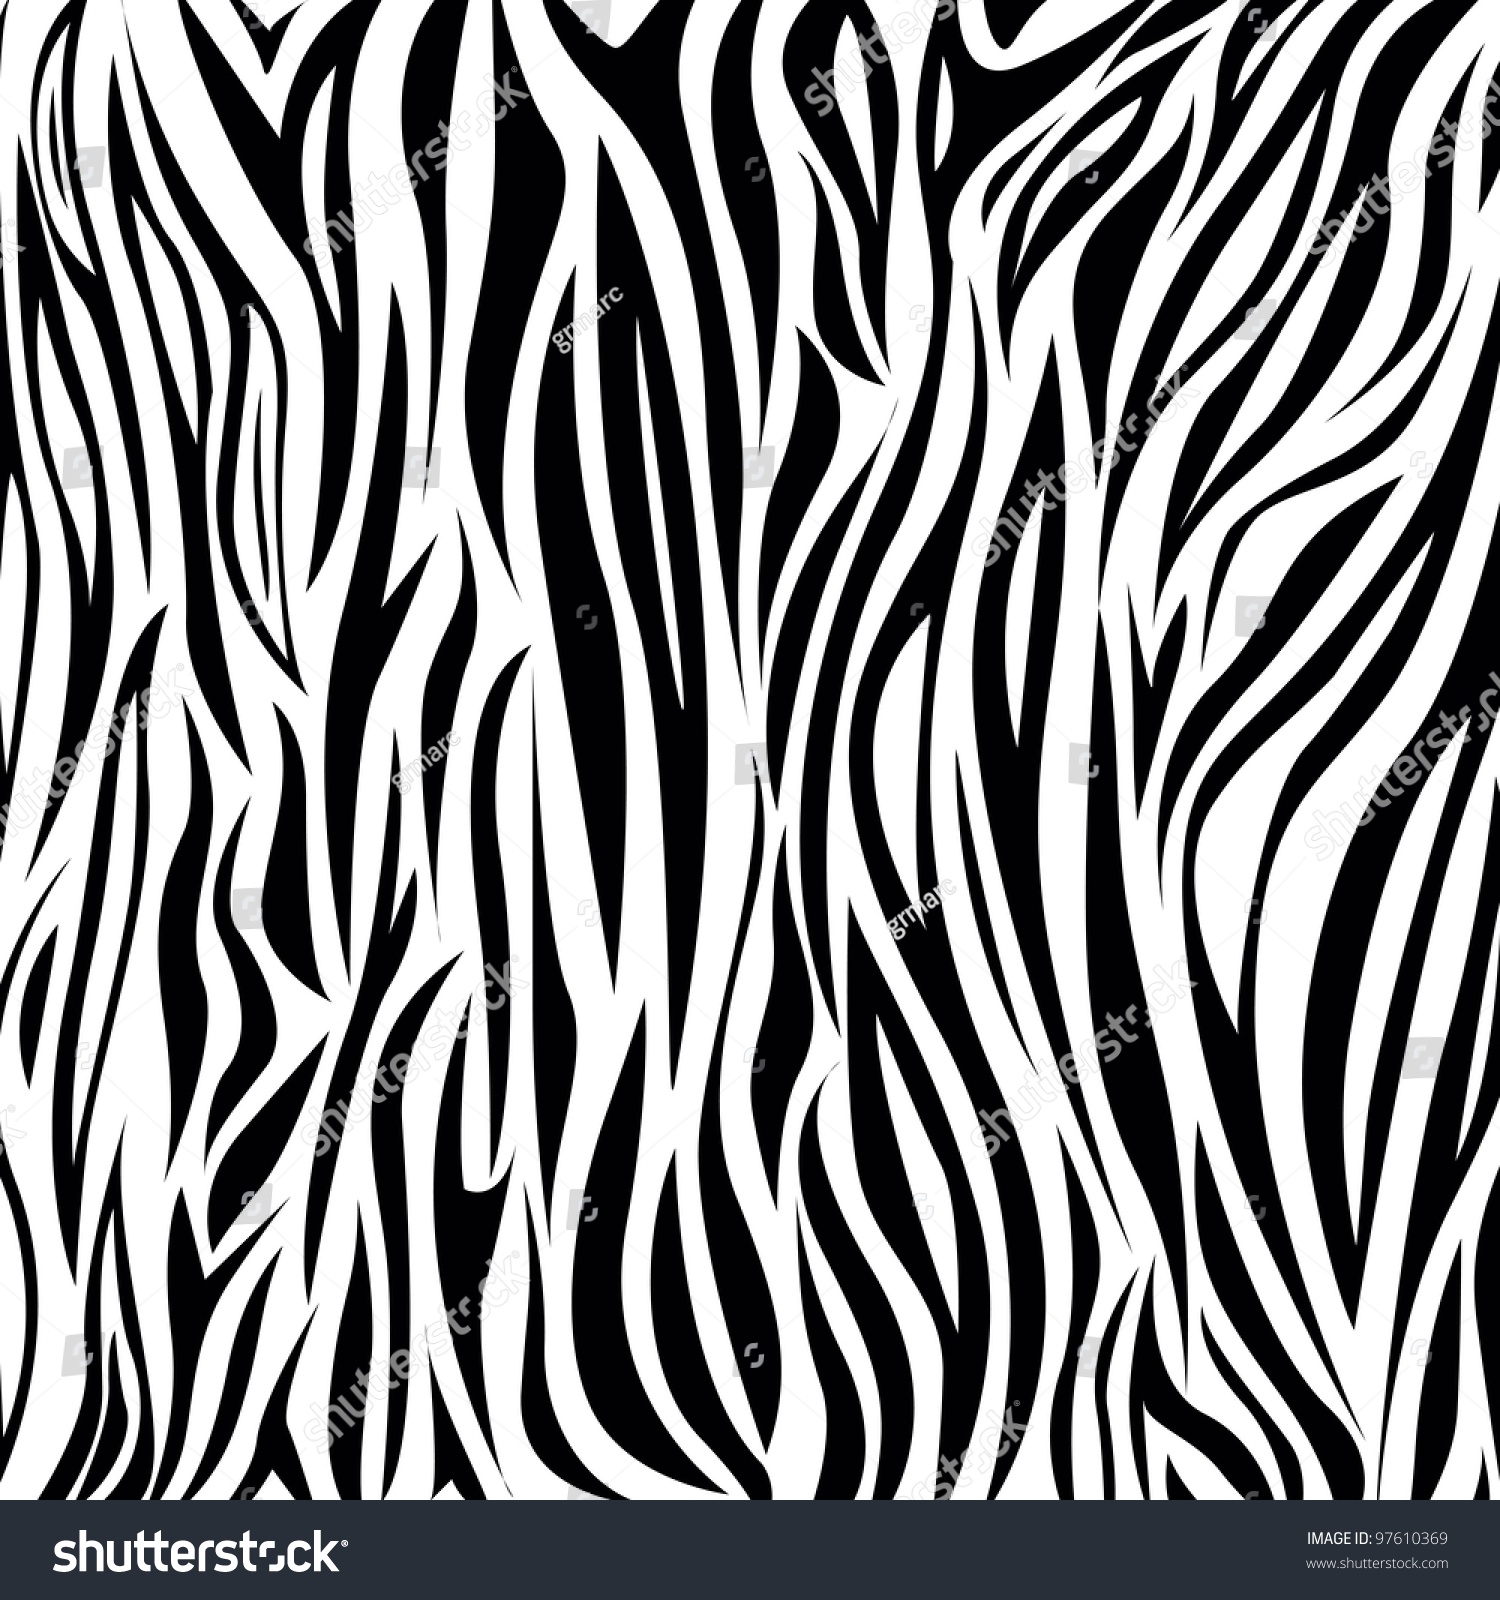 Animal Print Zebra Texture Background Black Stock Vector 97610369 ...